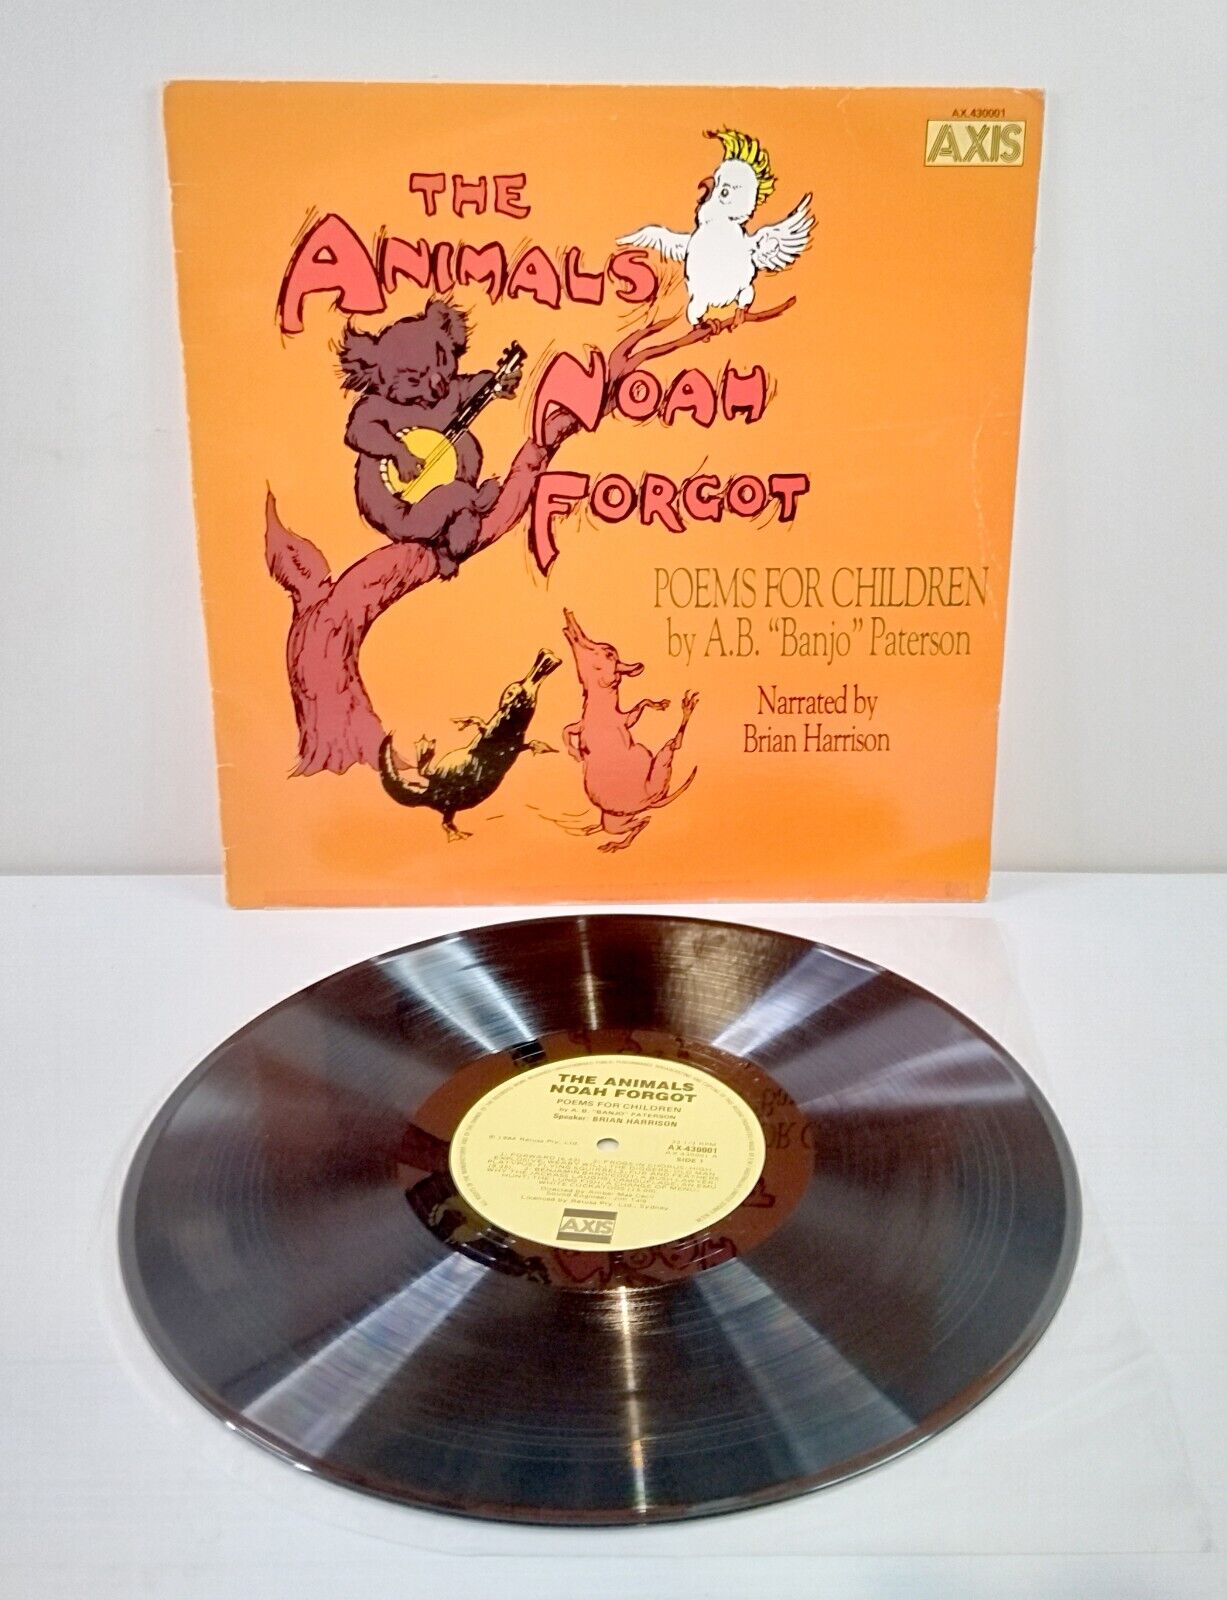 LP - Banjo Patterson, The Animals Noah Forgot - 1984 Axis, Australian Release